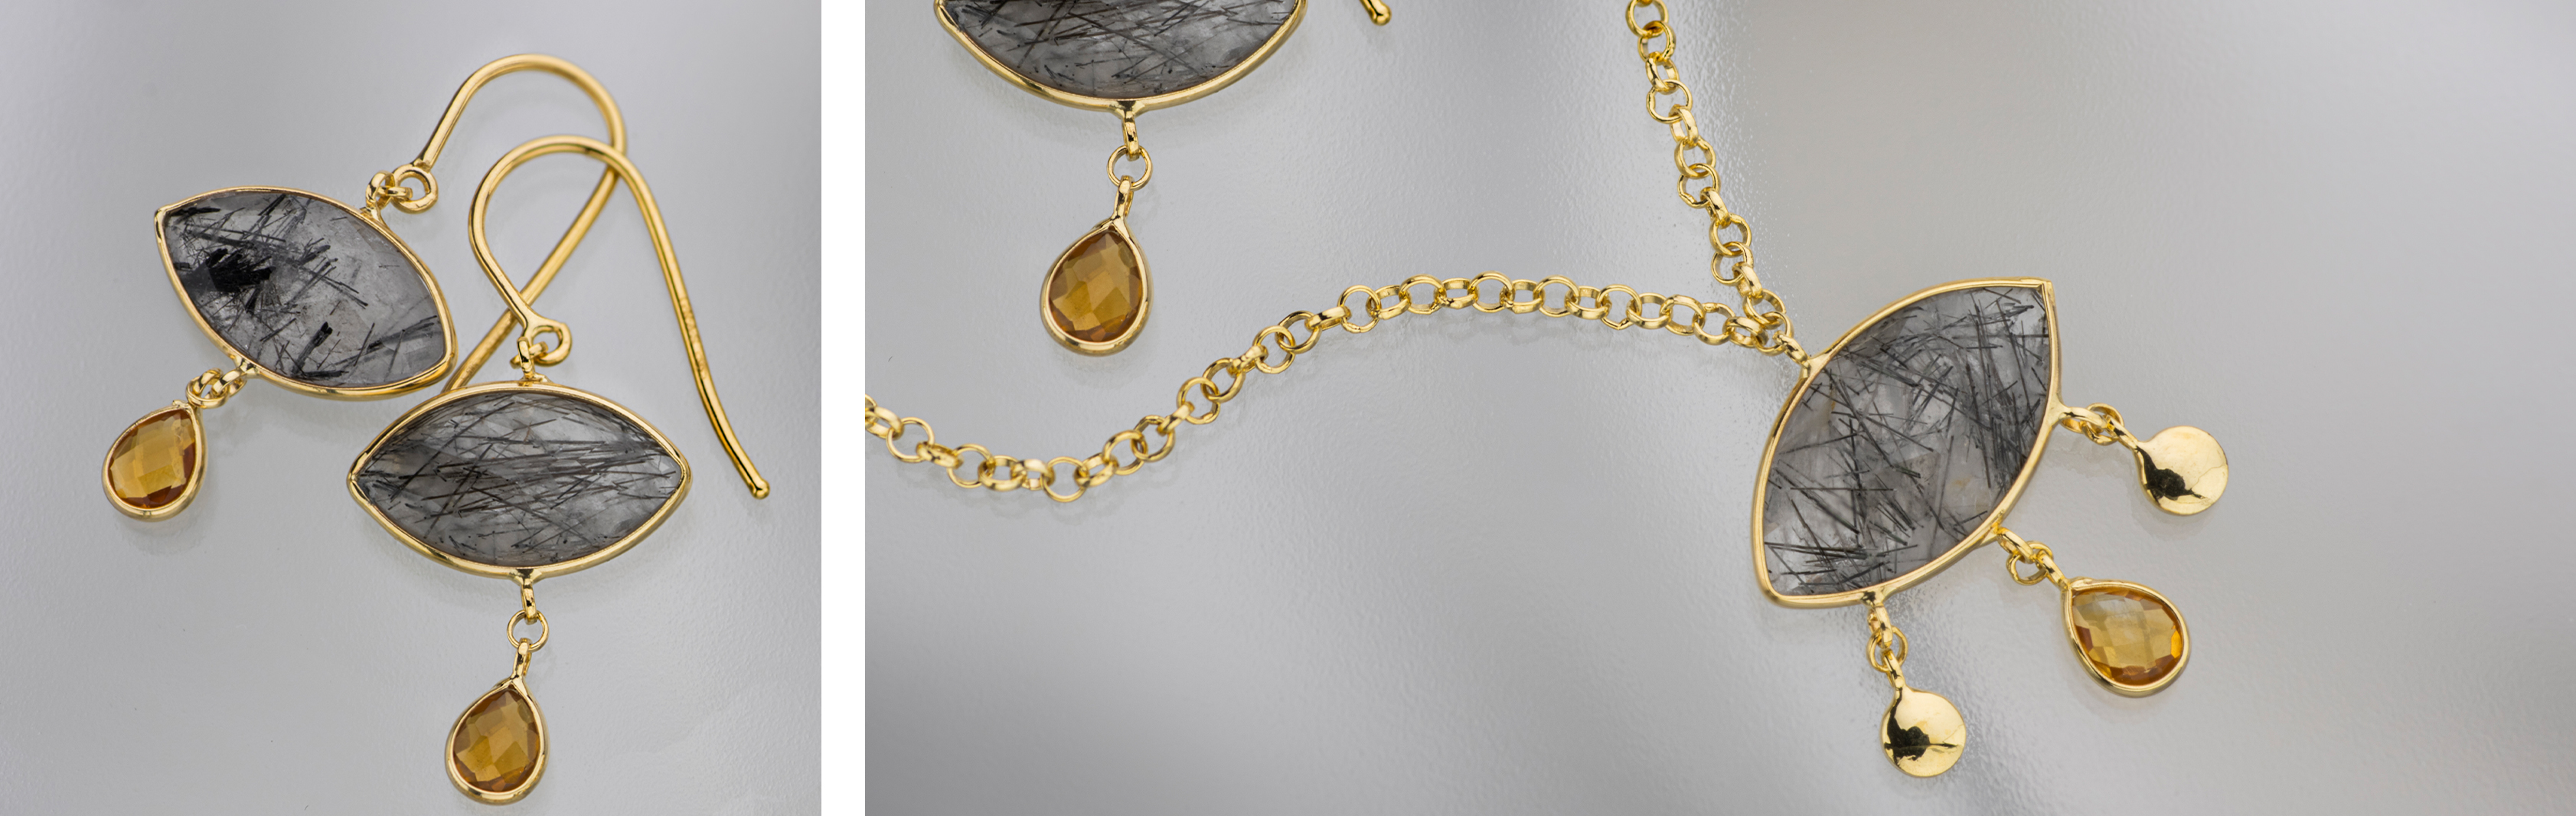 14k Gold Earrings, 14k Gold Necklace, 14k Gold Jewelry, Women Jewelry, Gras Jewelry, Gold Jewelry Gras, Rutile Quartz Earrings, Rutile Quartz Necklace, one of a kind jewelry, designed jewelry, unique jewelry